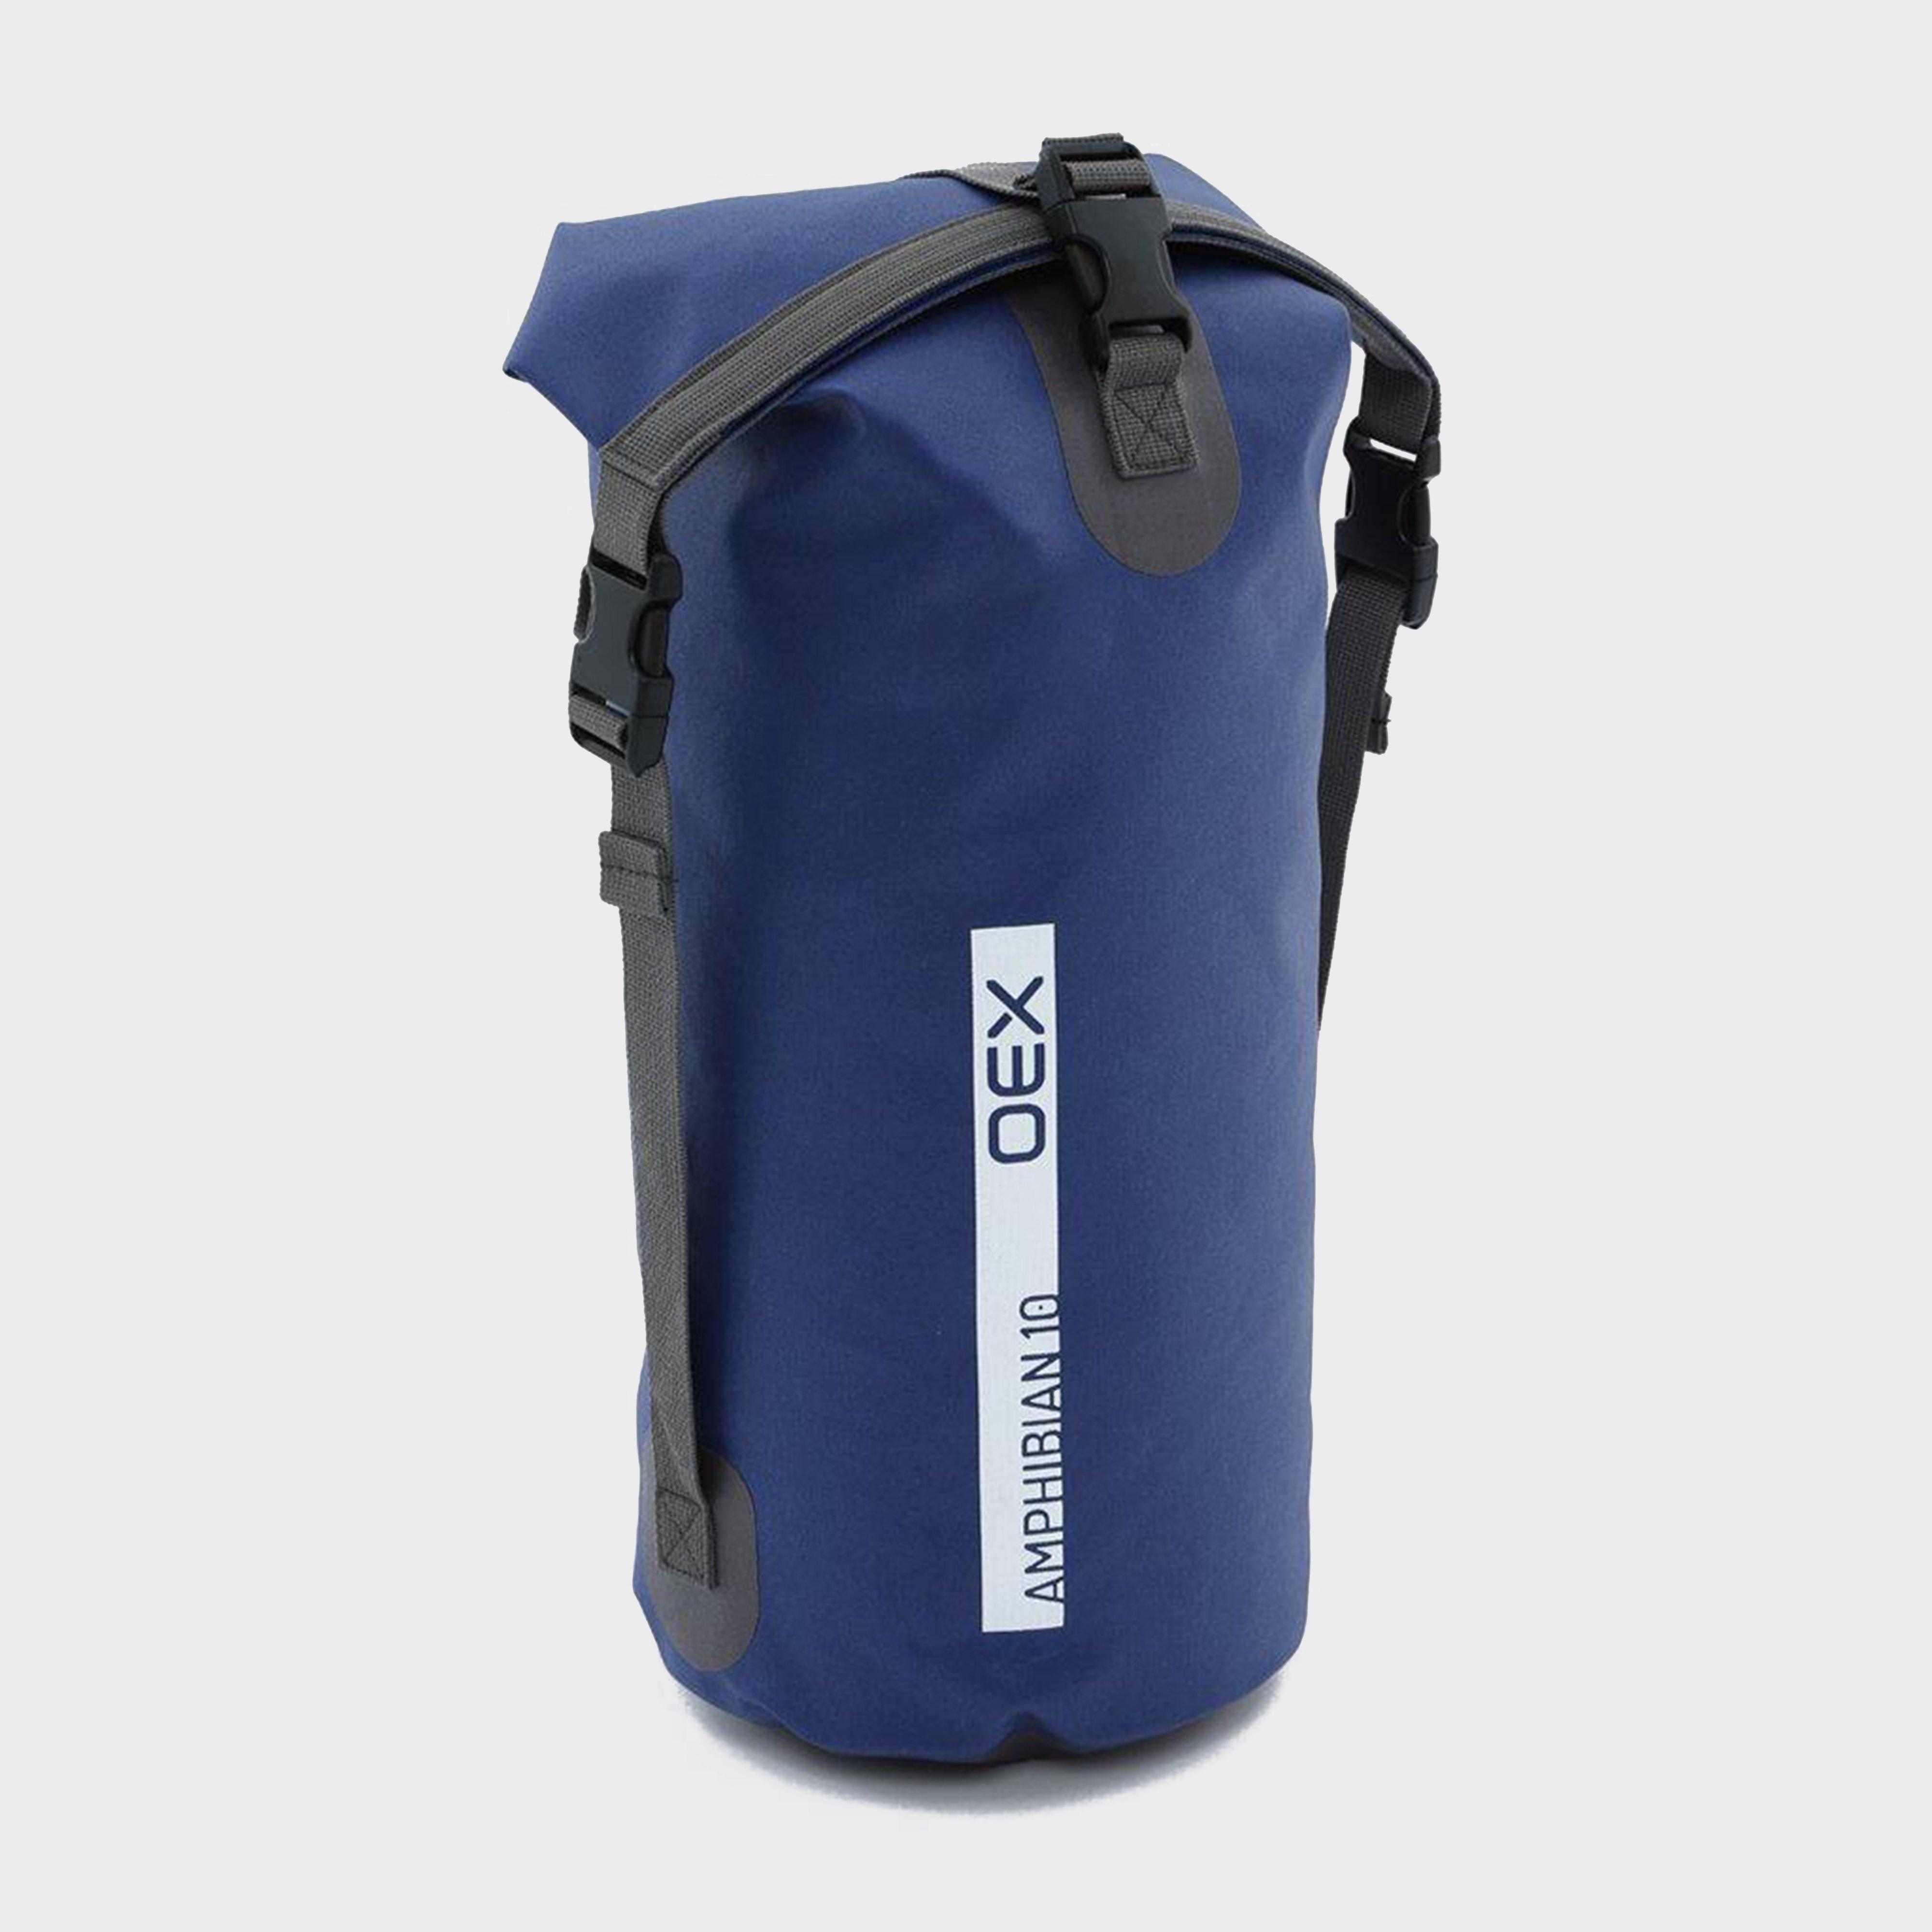 Amphibian Waterproof Bag 10L - Blue, Blue